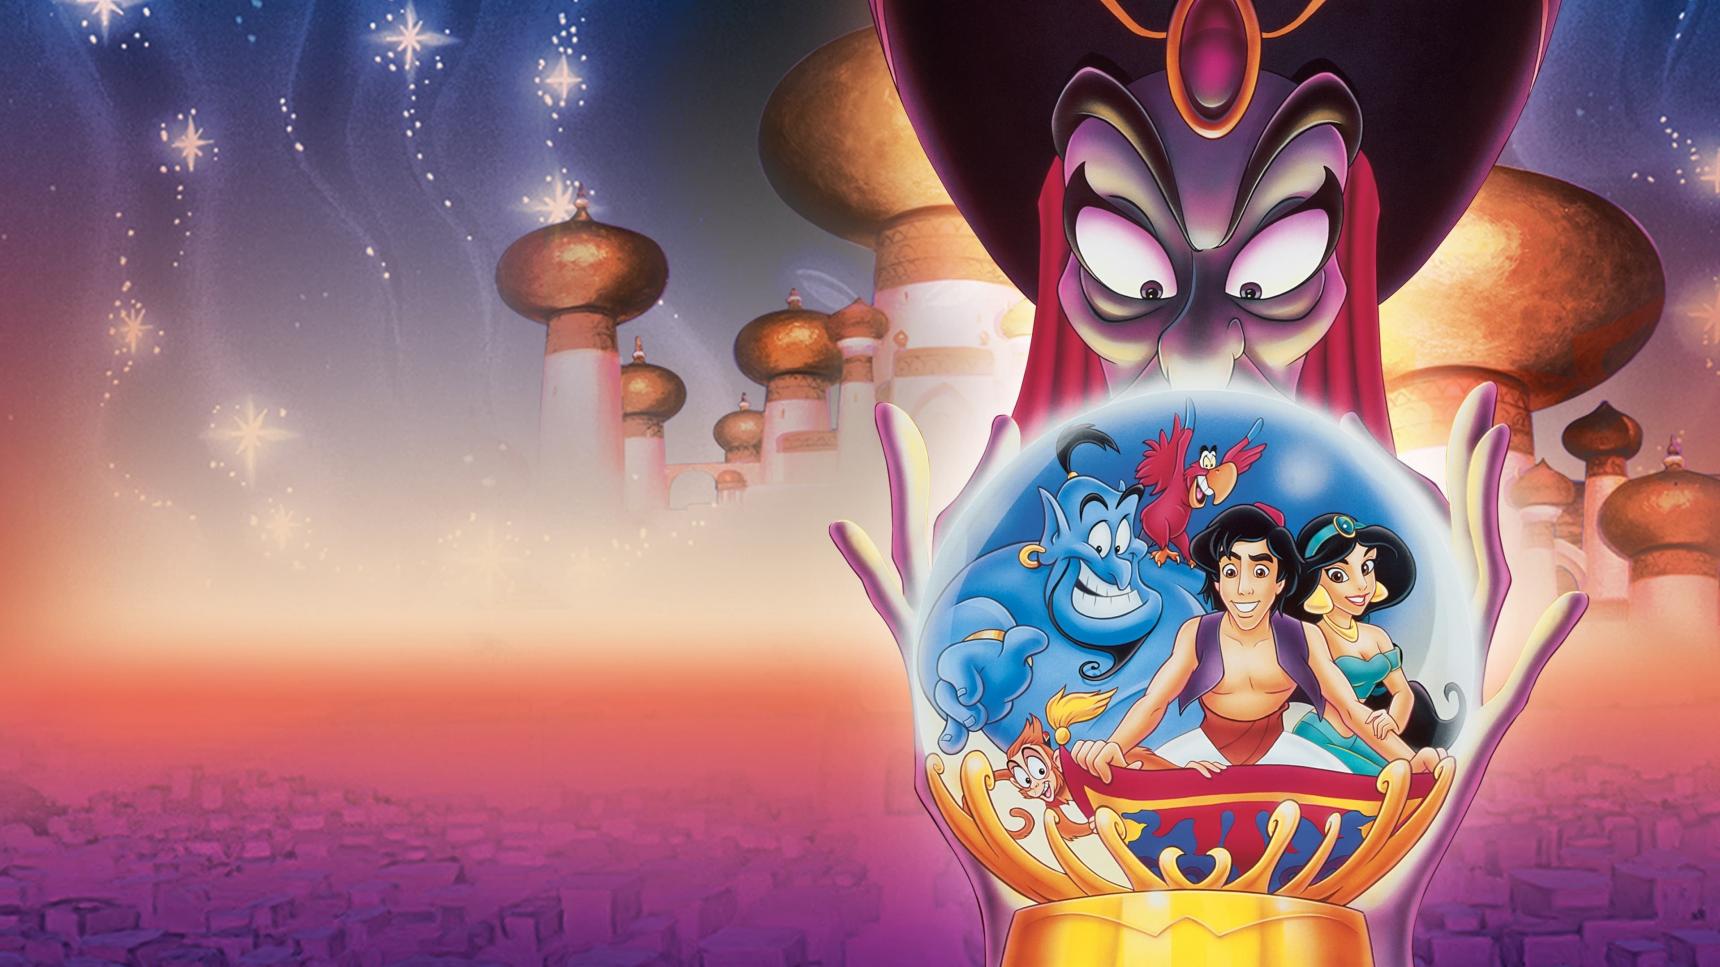 Fondo de pantalla de la película Aladdin 2: El retorno de Jafar en PELISPEDIA gratis